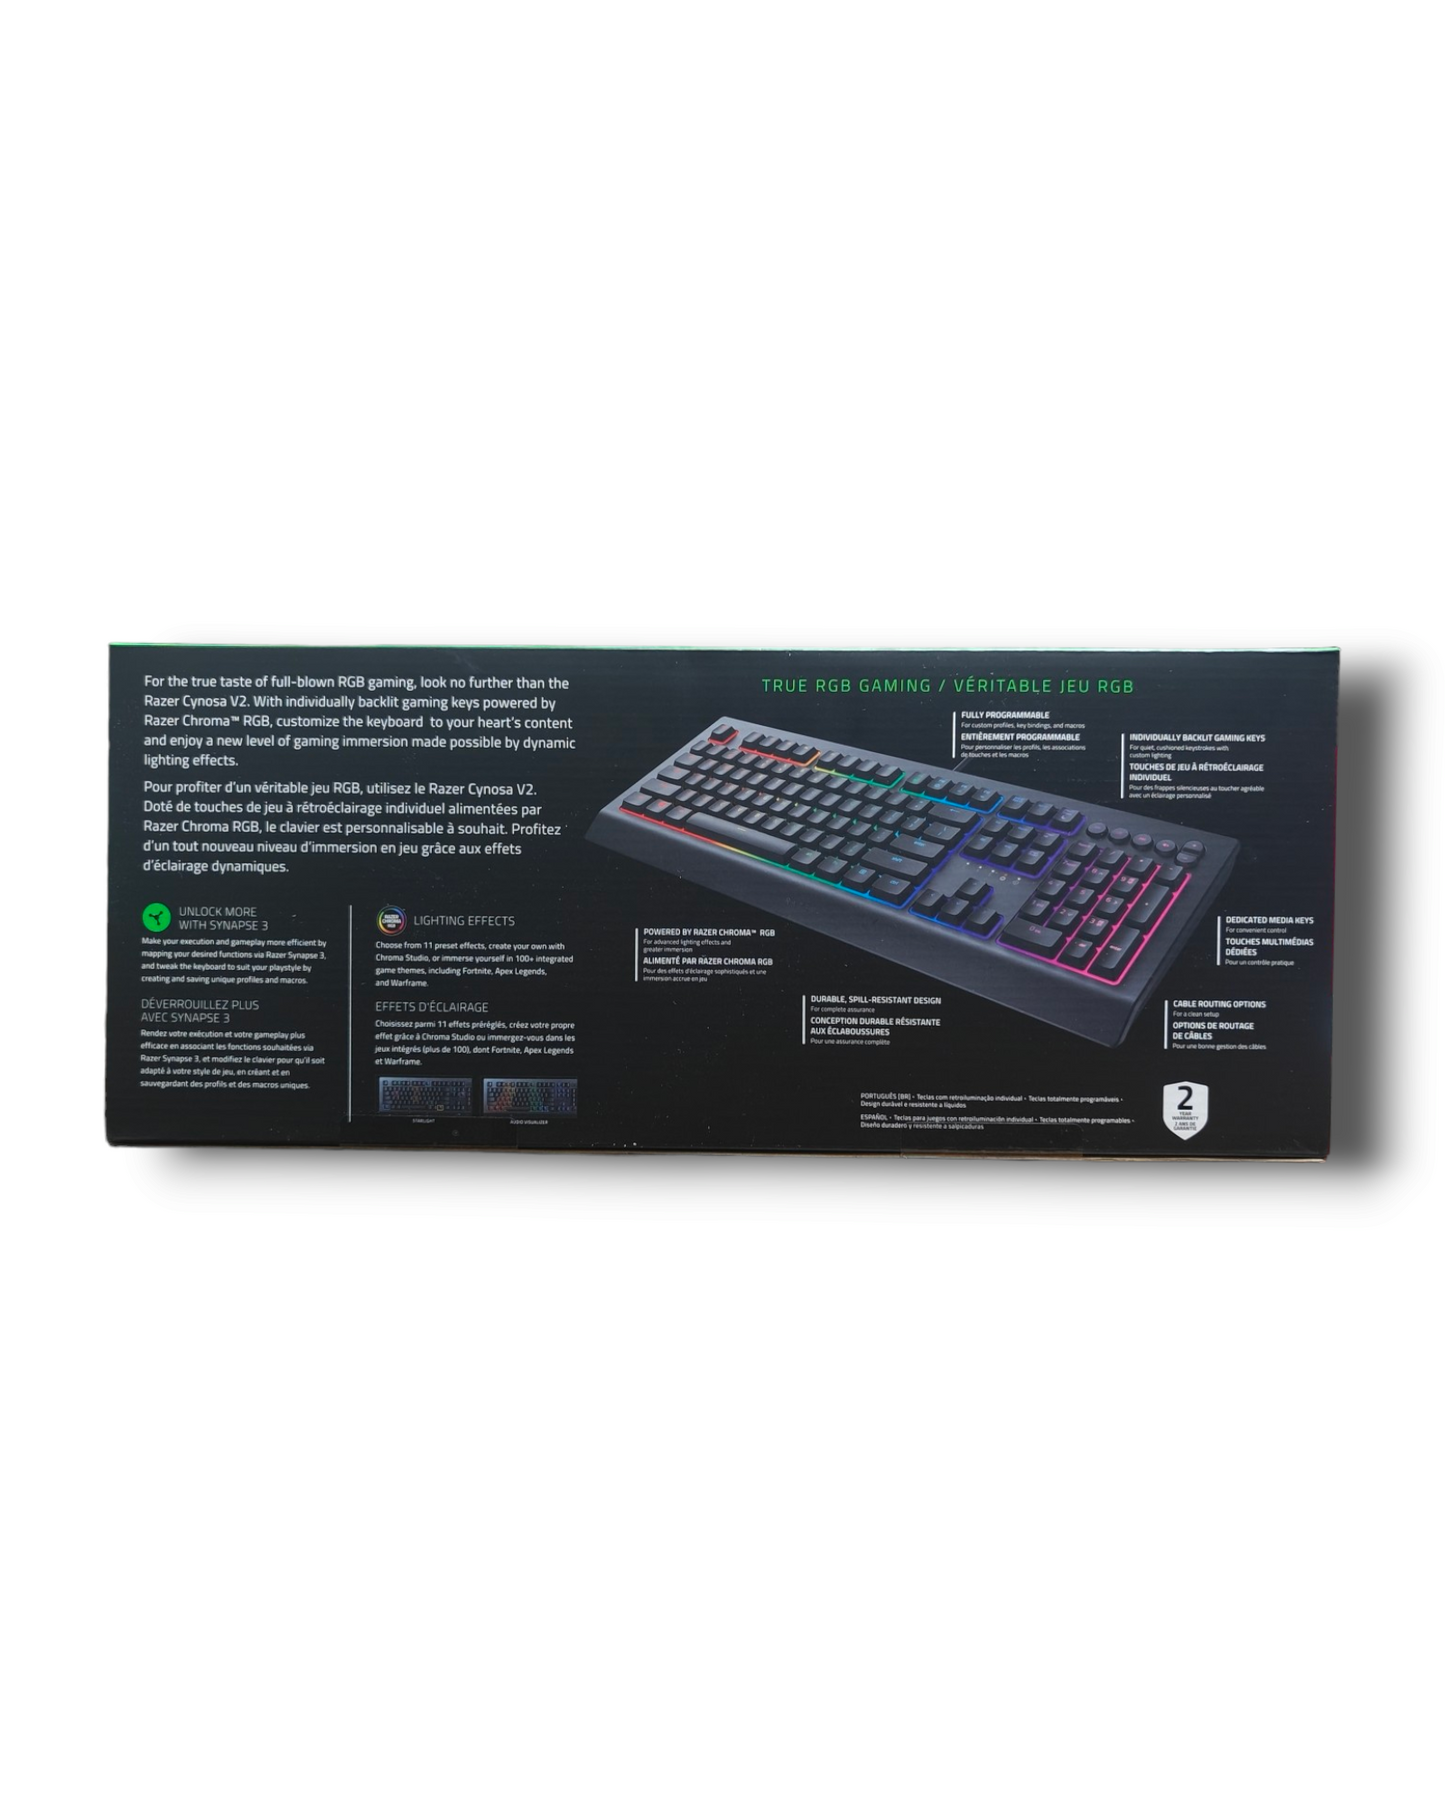 Razer - Cynosa V2 Full Size Wired Membrane Gaming Keyboard with Chroma RGB Light - Ricky's Garage